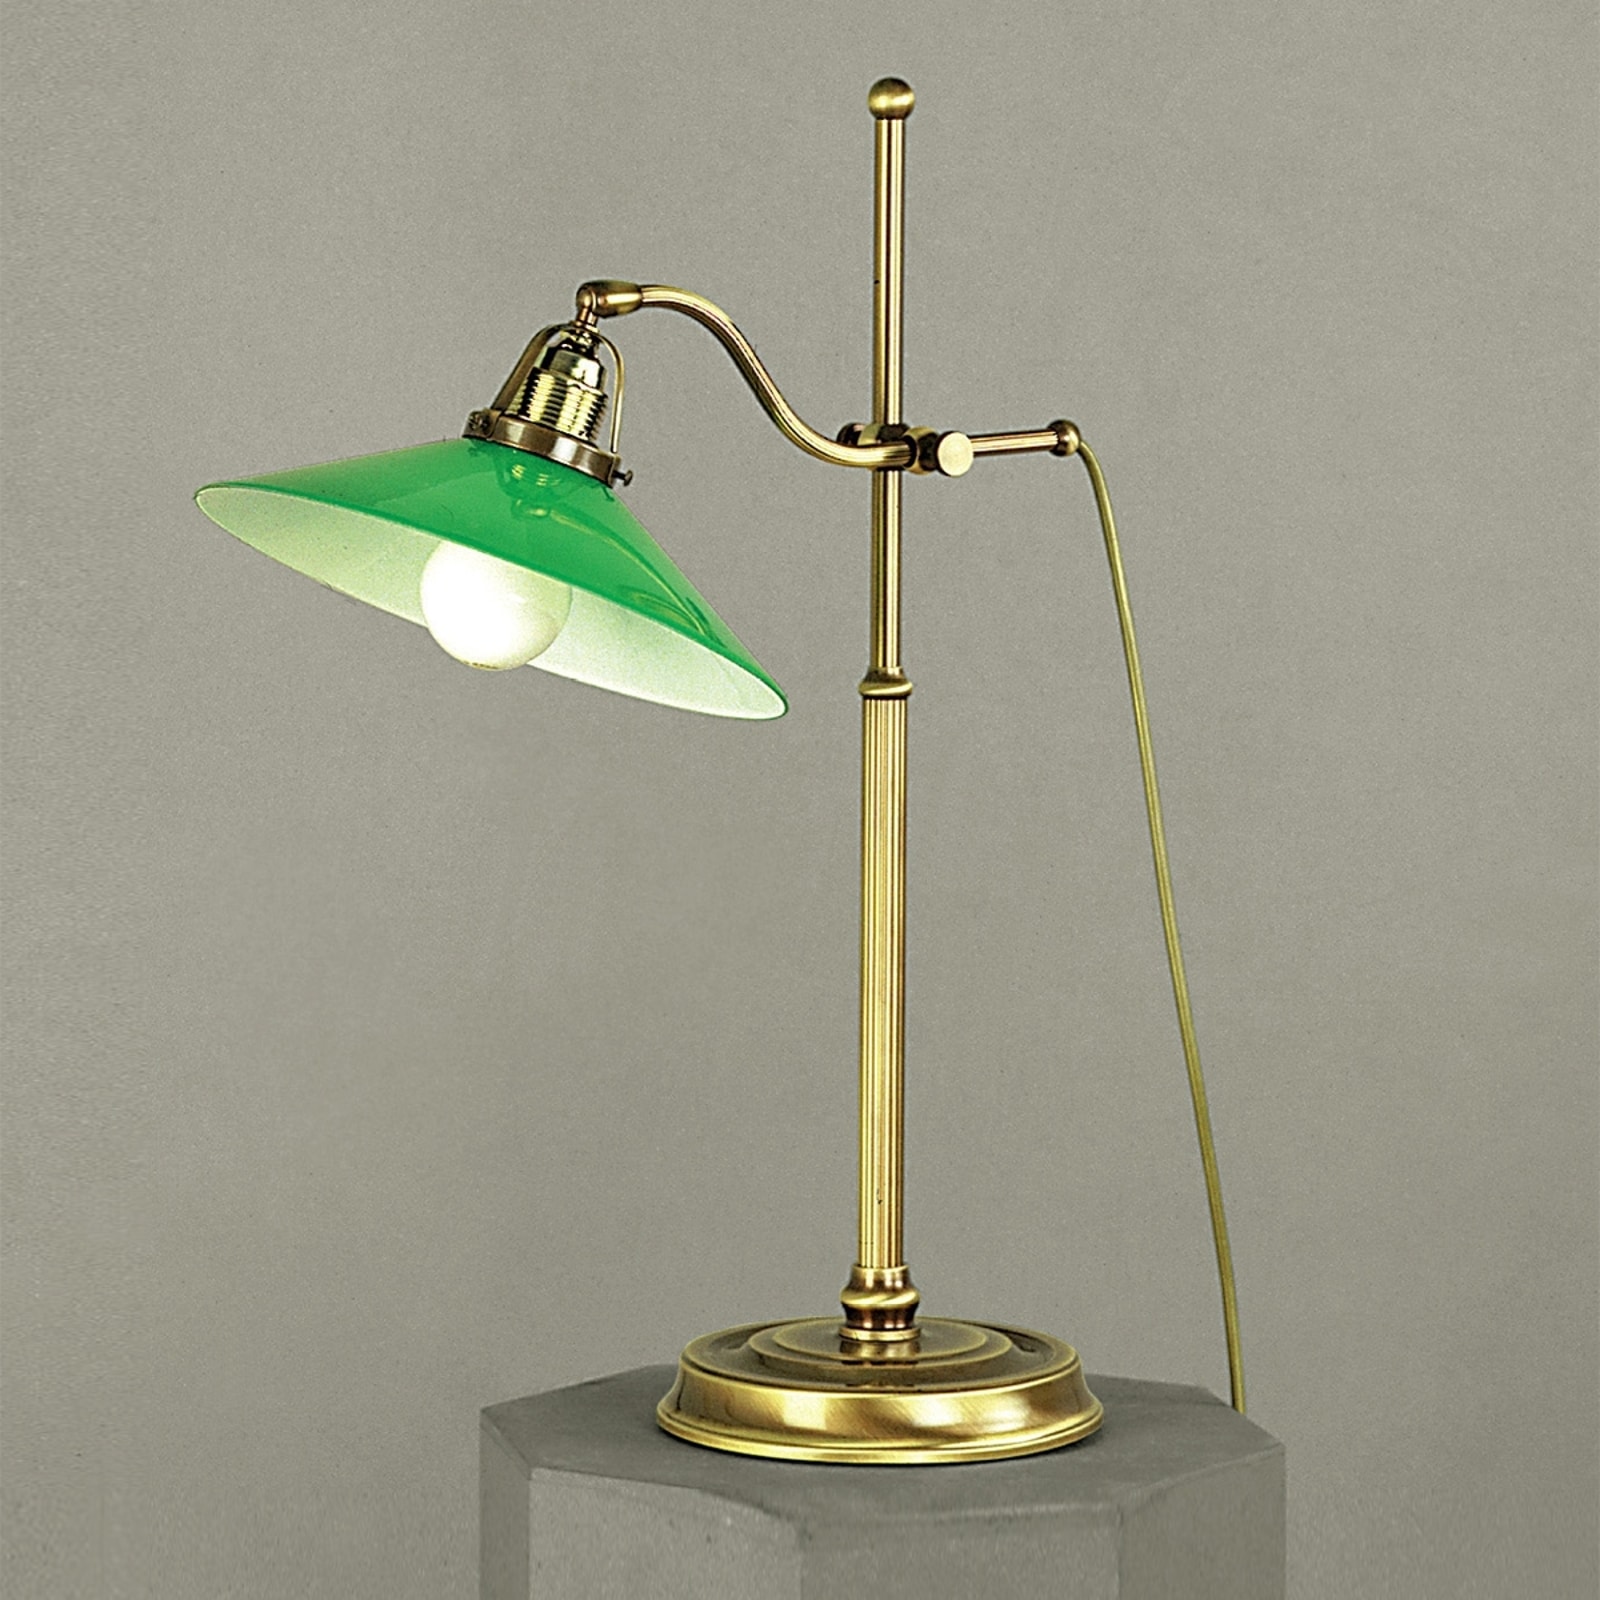 Rafflesia Arnoldi Ordsprog ven Grøn VERDINA bordlampe med patina - Grønne Lamper